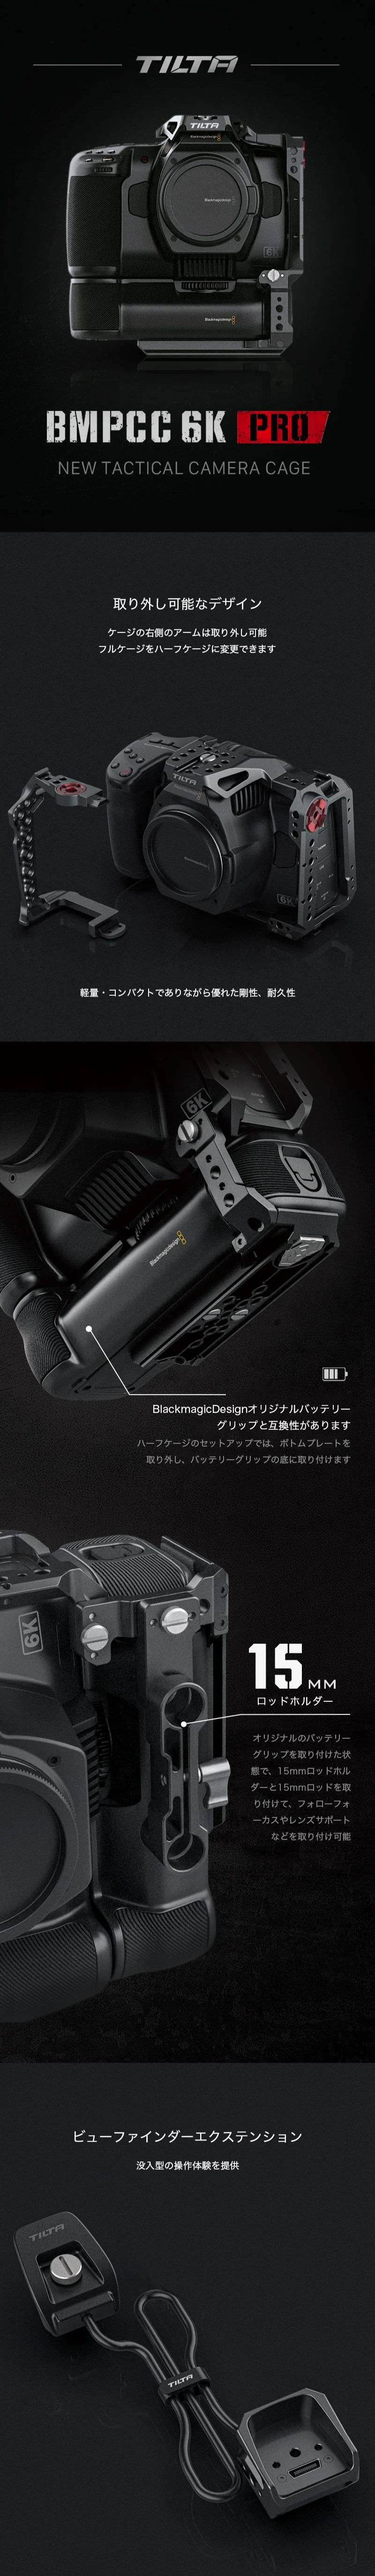 New Tactical Camera Cage for BMPCC 6K Pro | TIL...